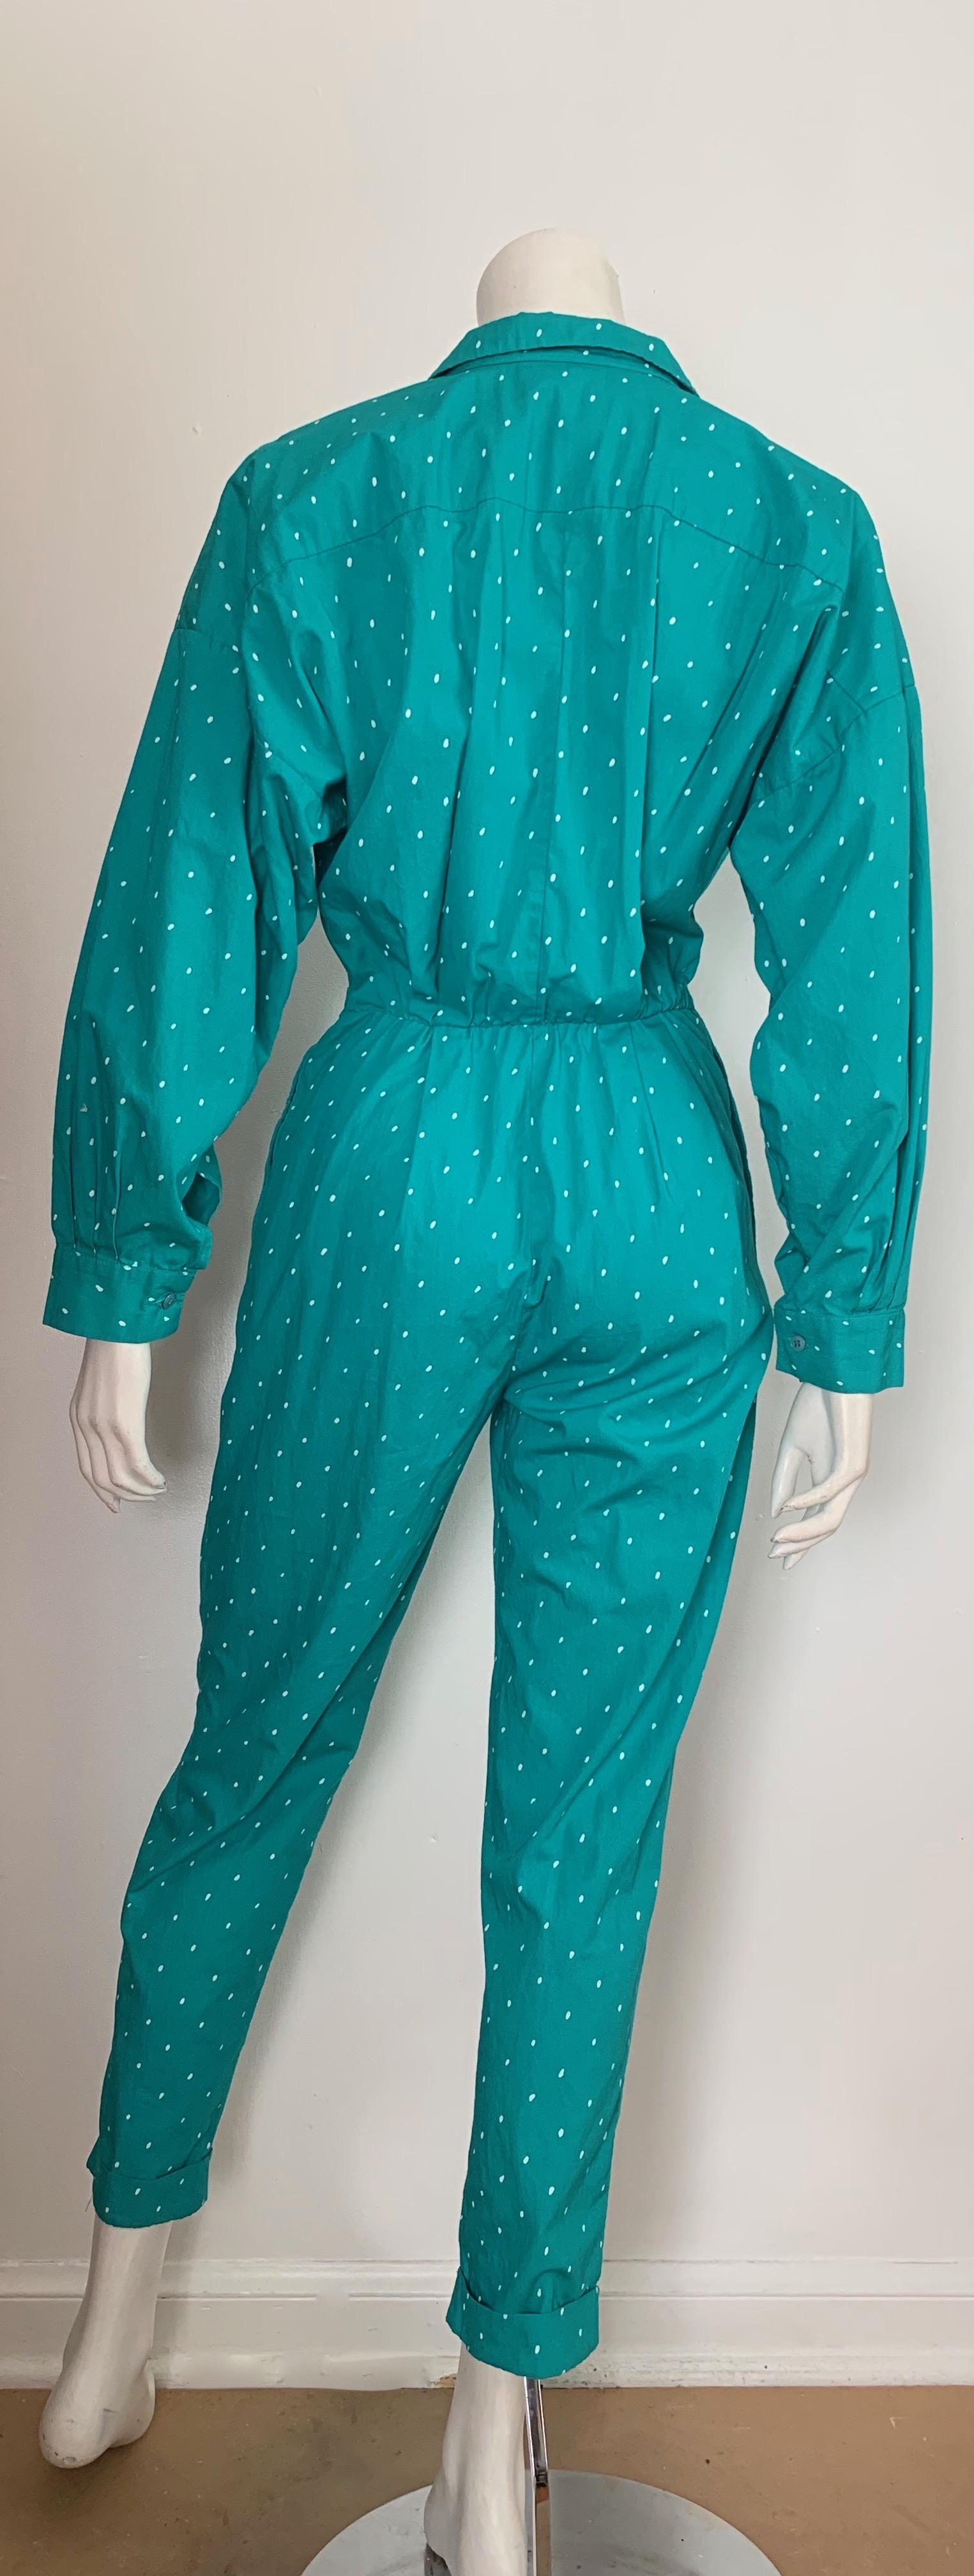 Saint Germain 1980s Cotton Polka Dot Jumpsuit with Pockets Size 4.  5